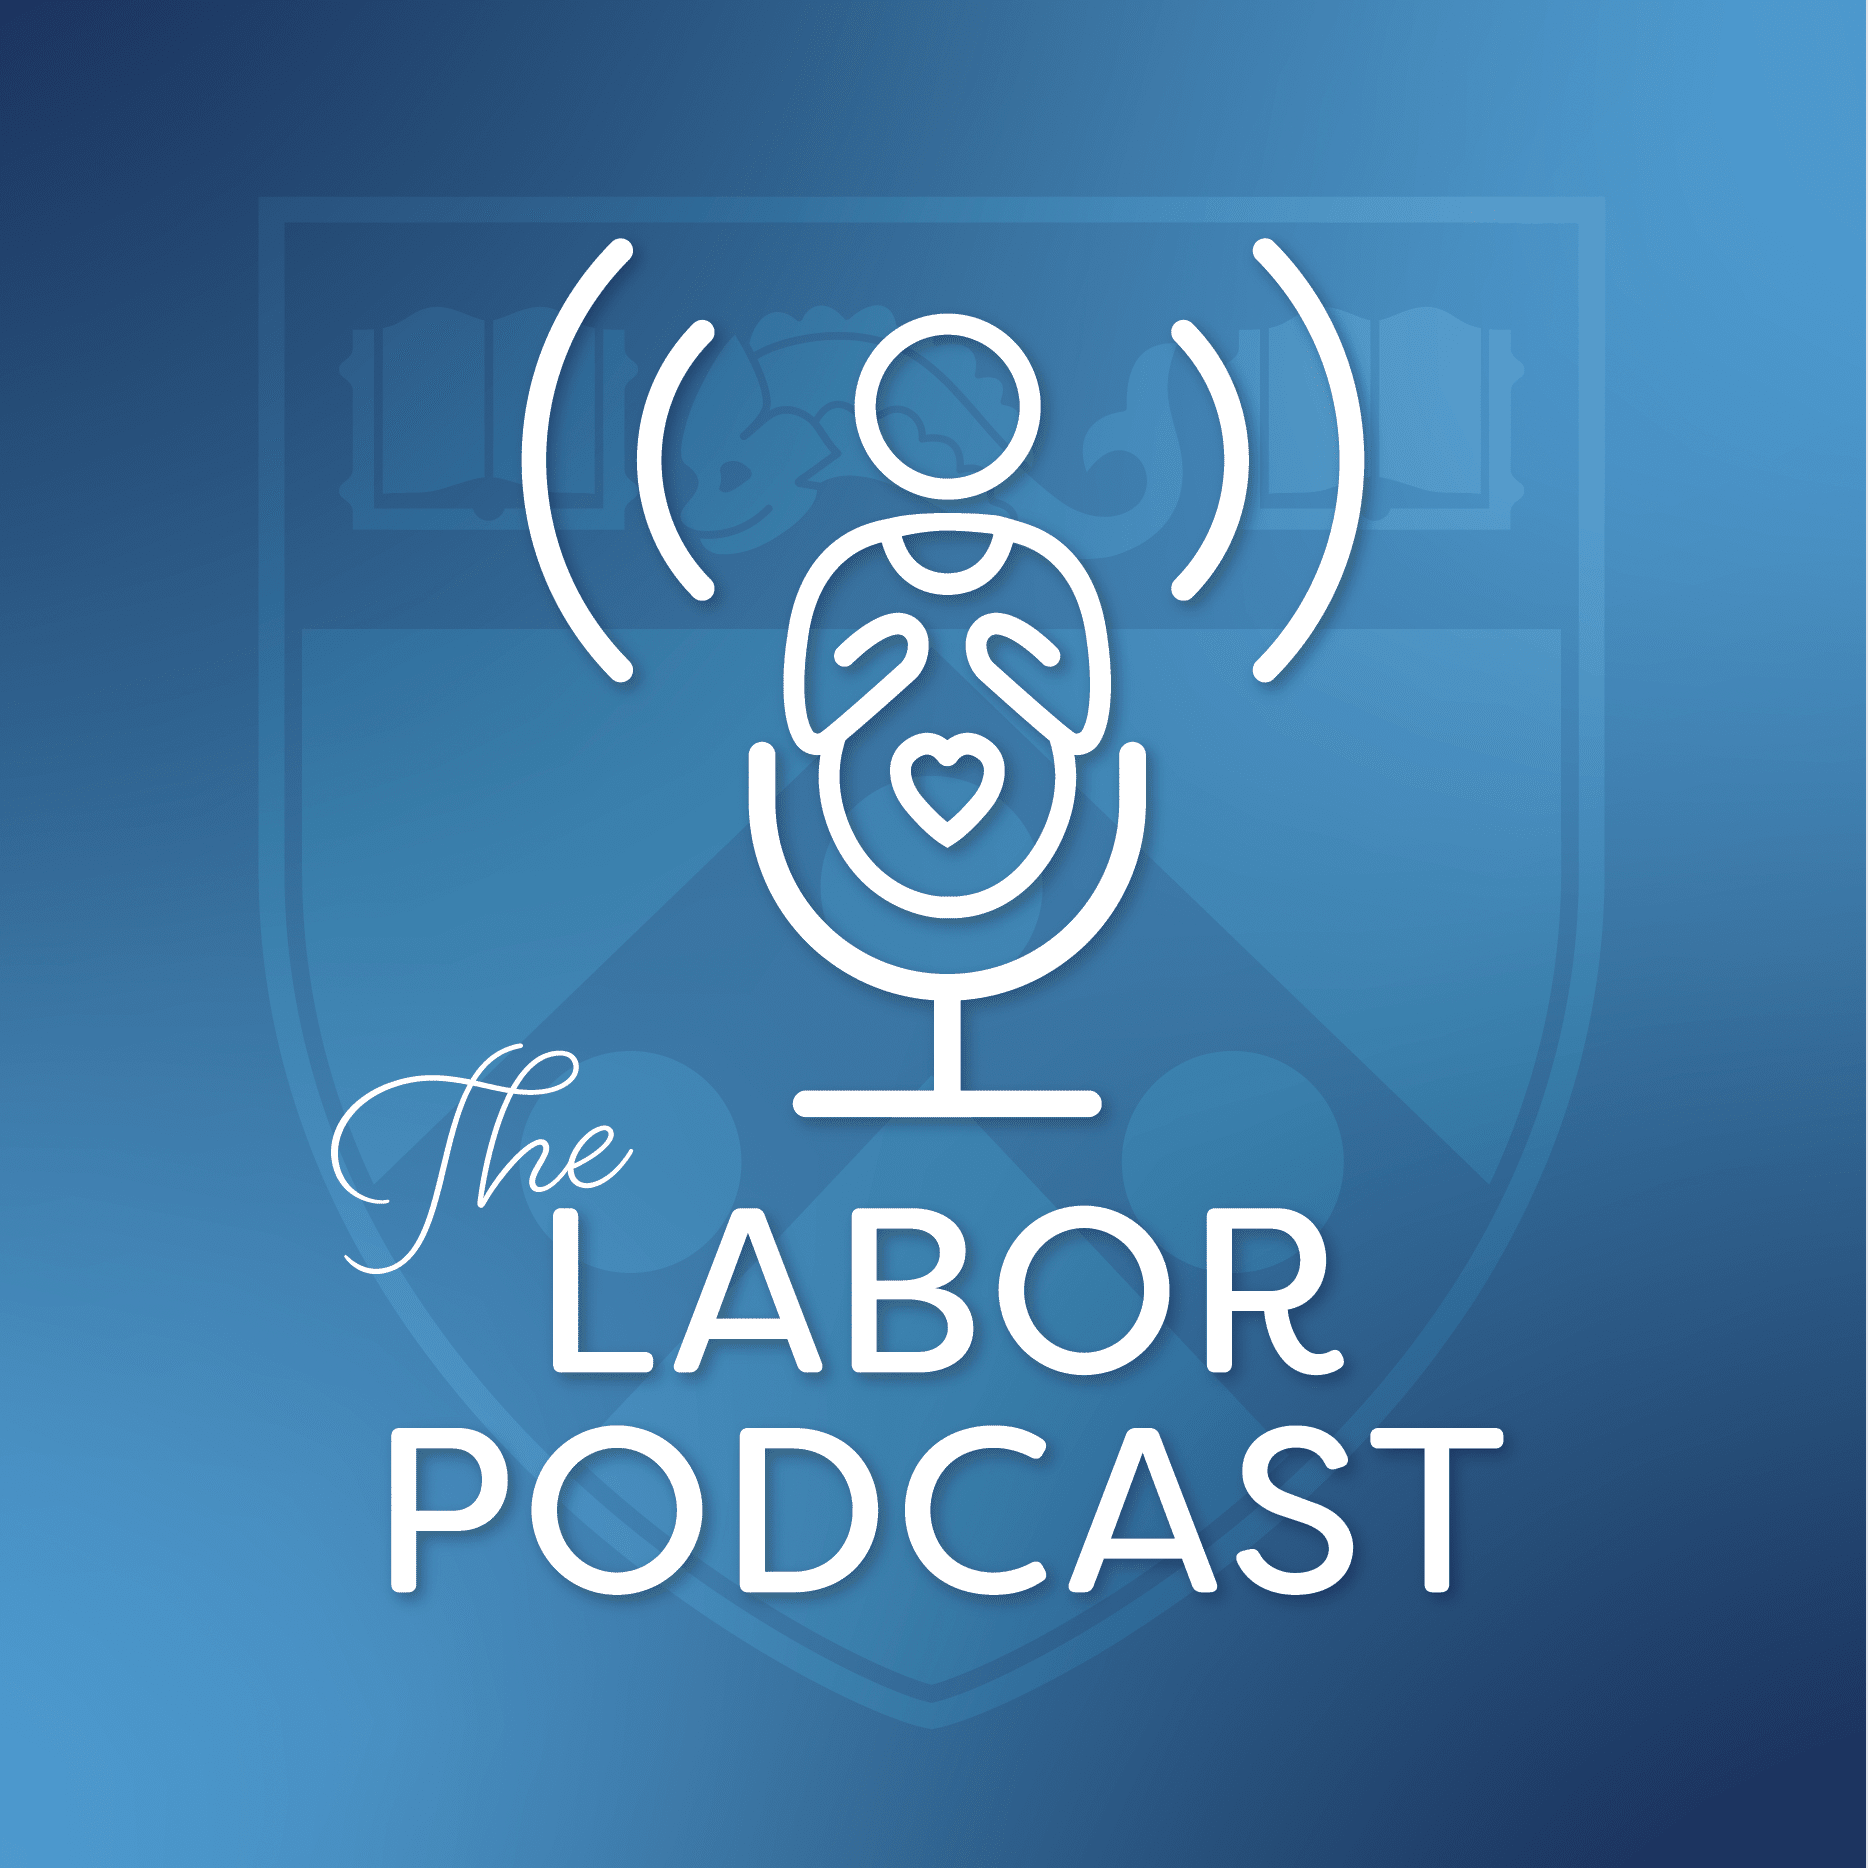 The Penn Medicine Labor Podcast